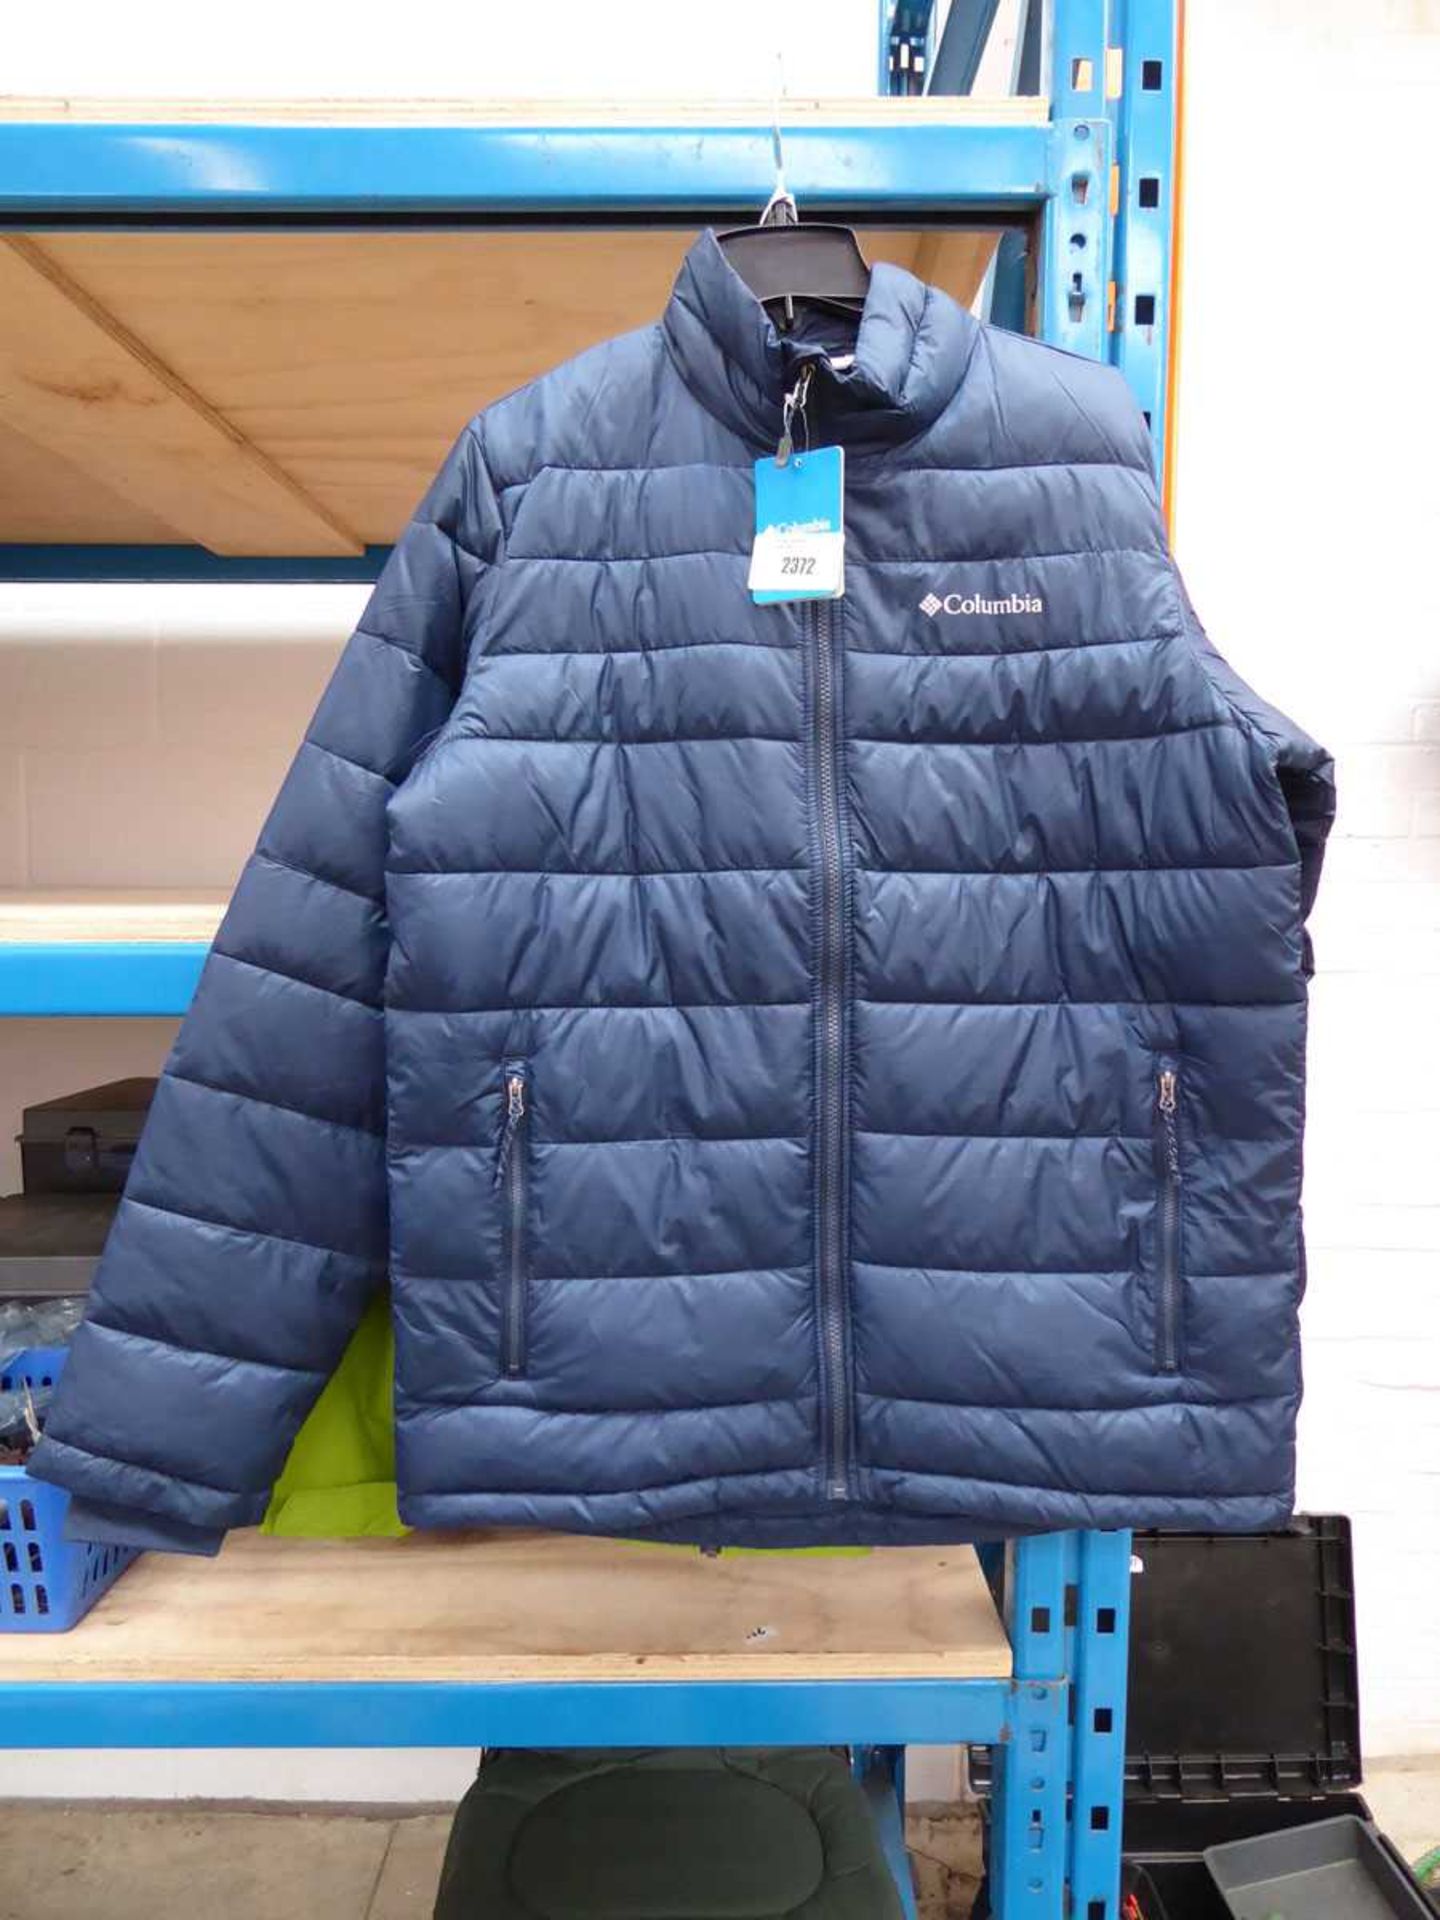 +VAT Columbia full zip navy blue puffer jacket (size M) with Columbia full zip green and blue